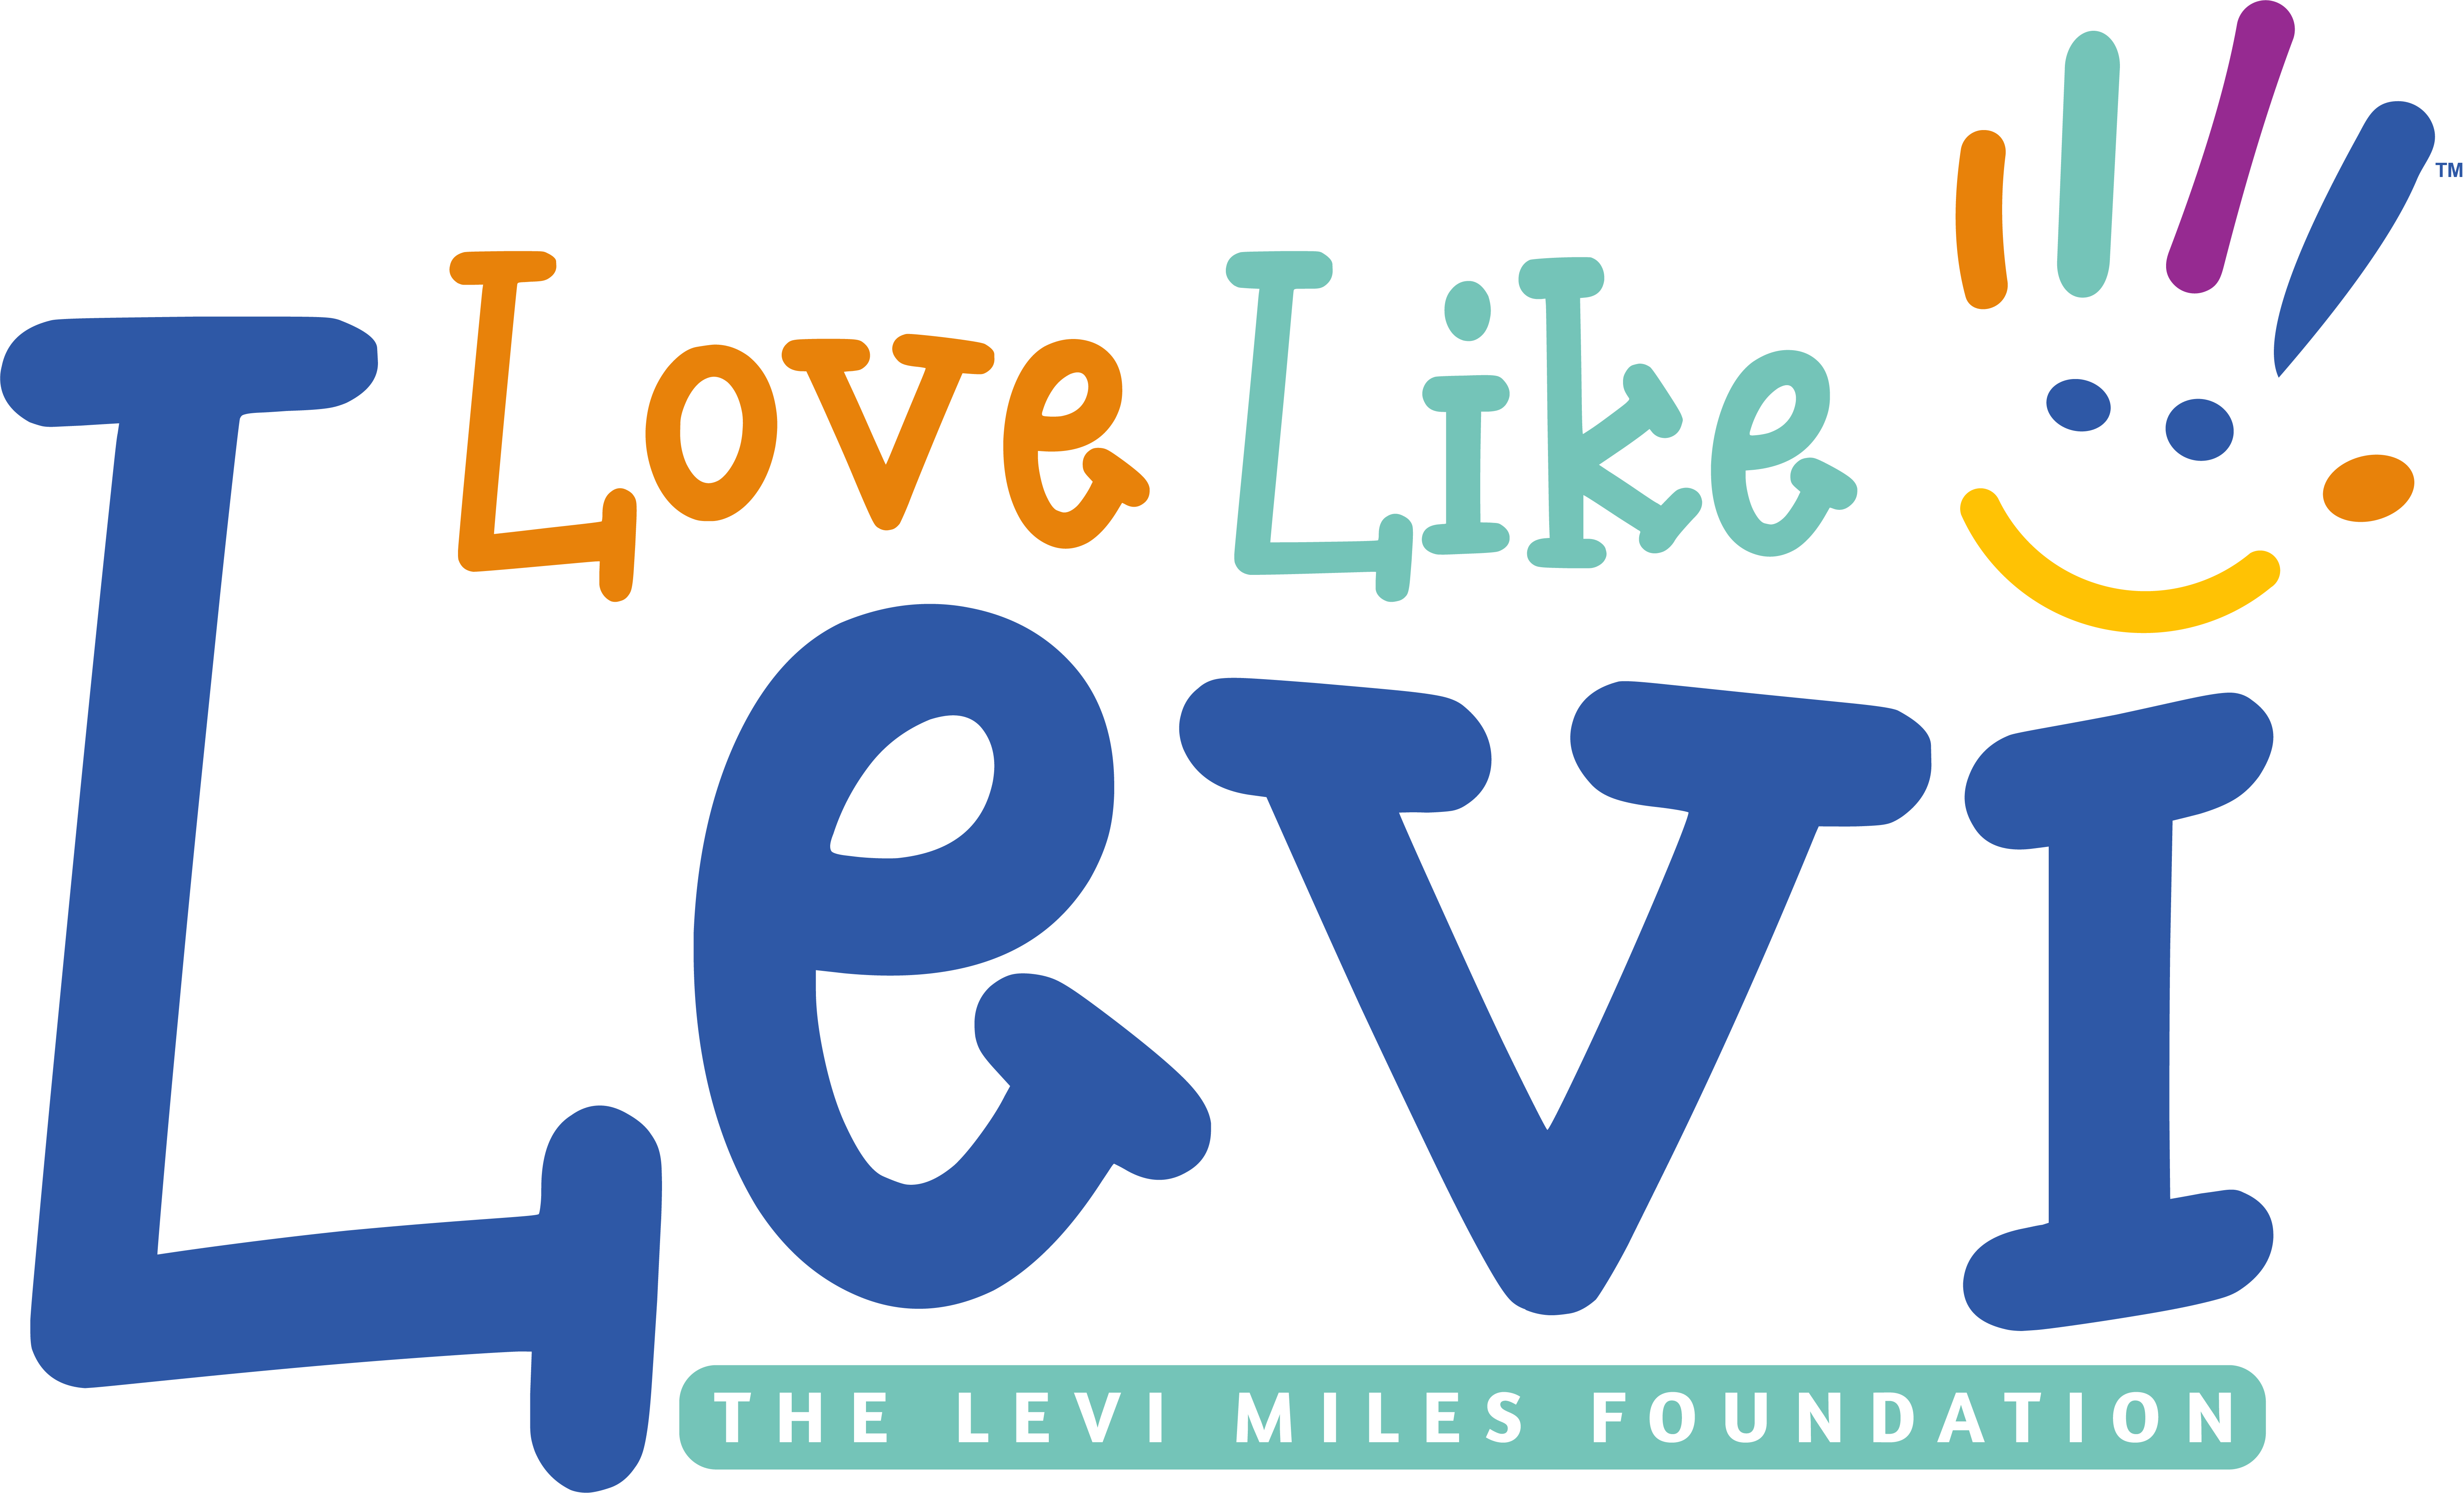 The Levi Miles Foundation logo